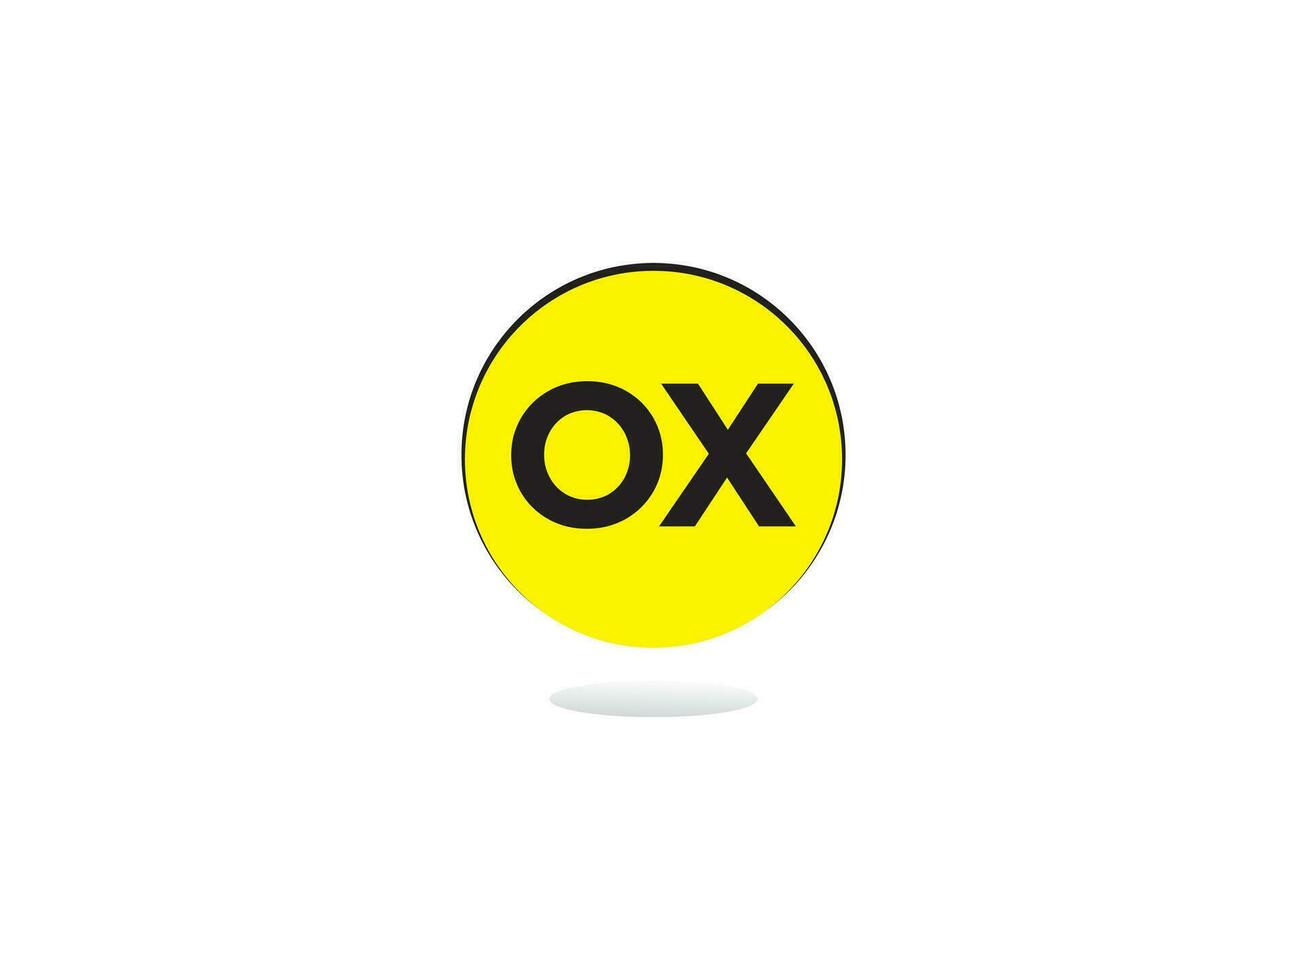 alfabet oxe logotyp bild, minimalistisk oxe första cirkel logotyp vektor